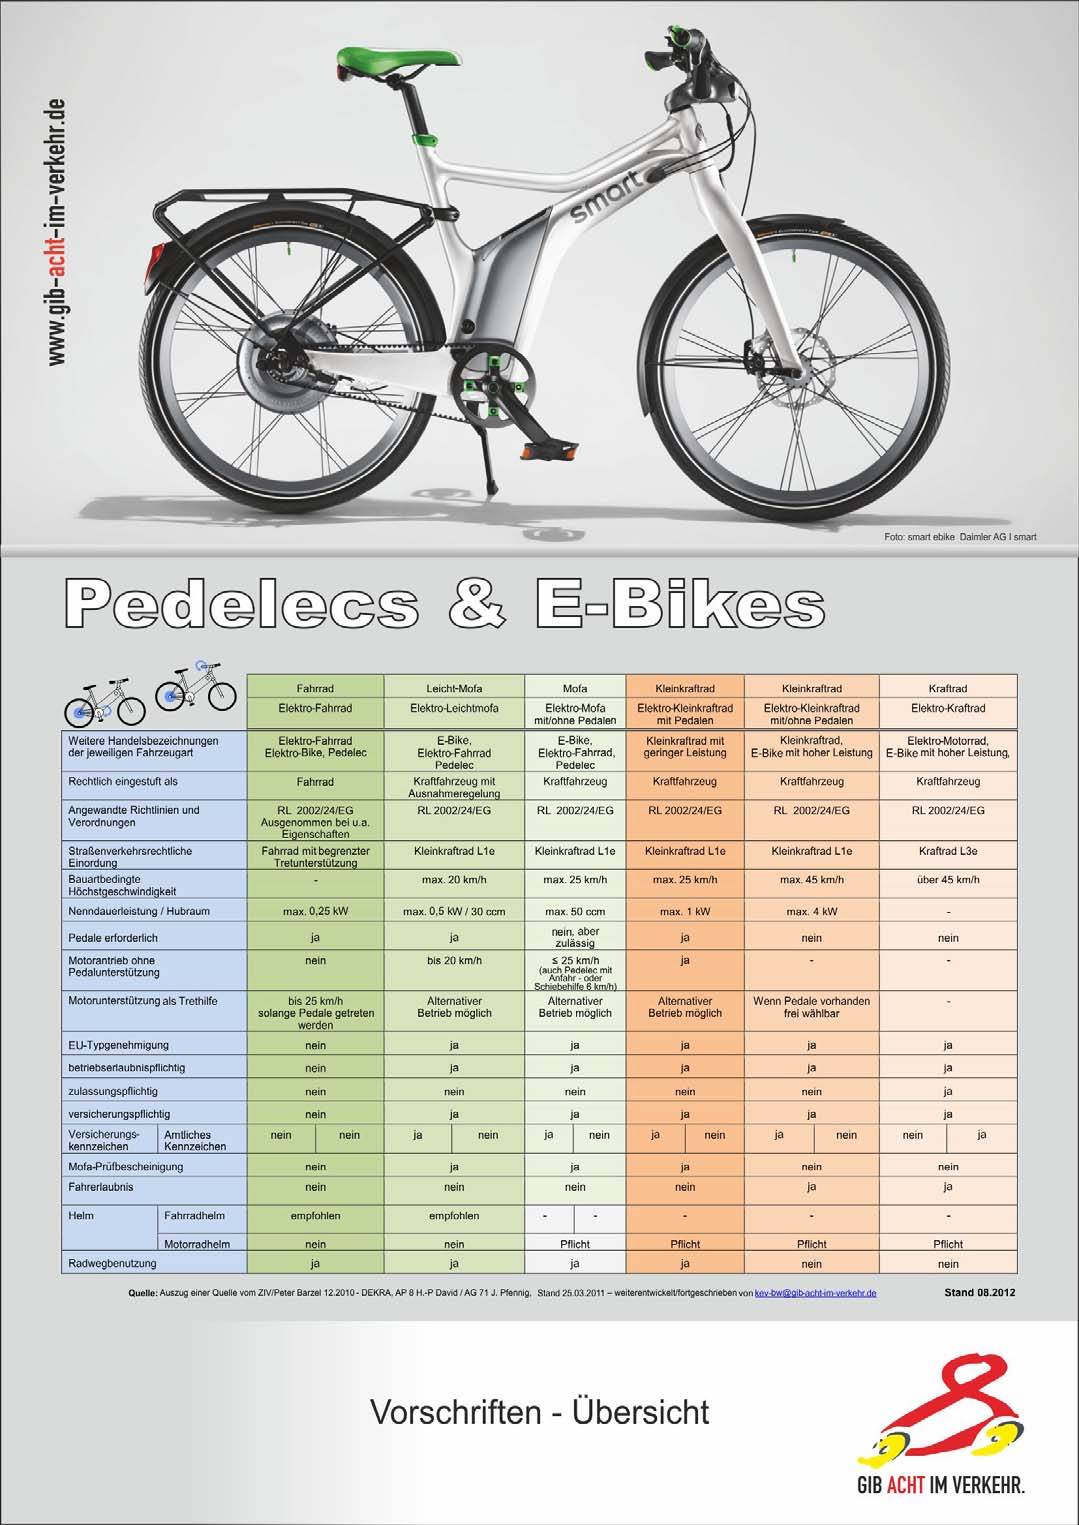 Pedelecs & E-Bikes Info